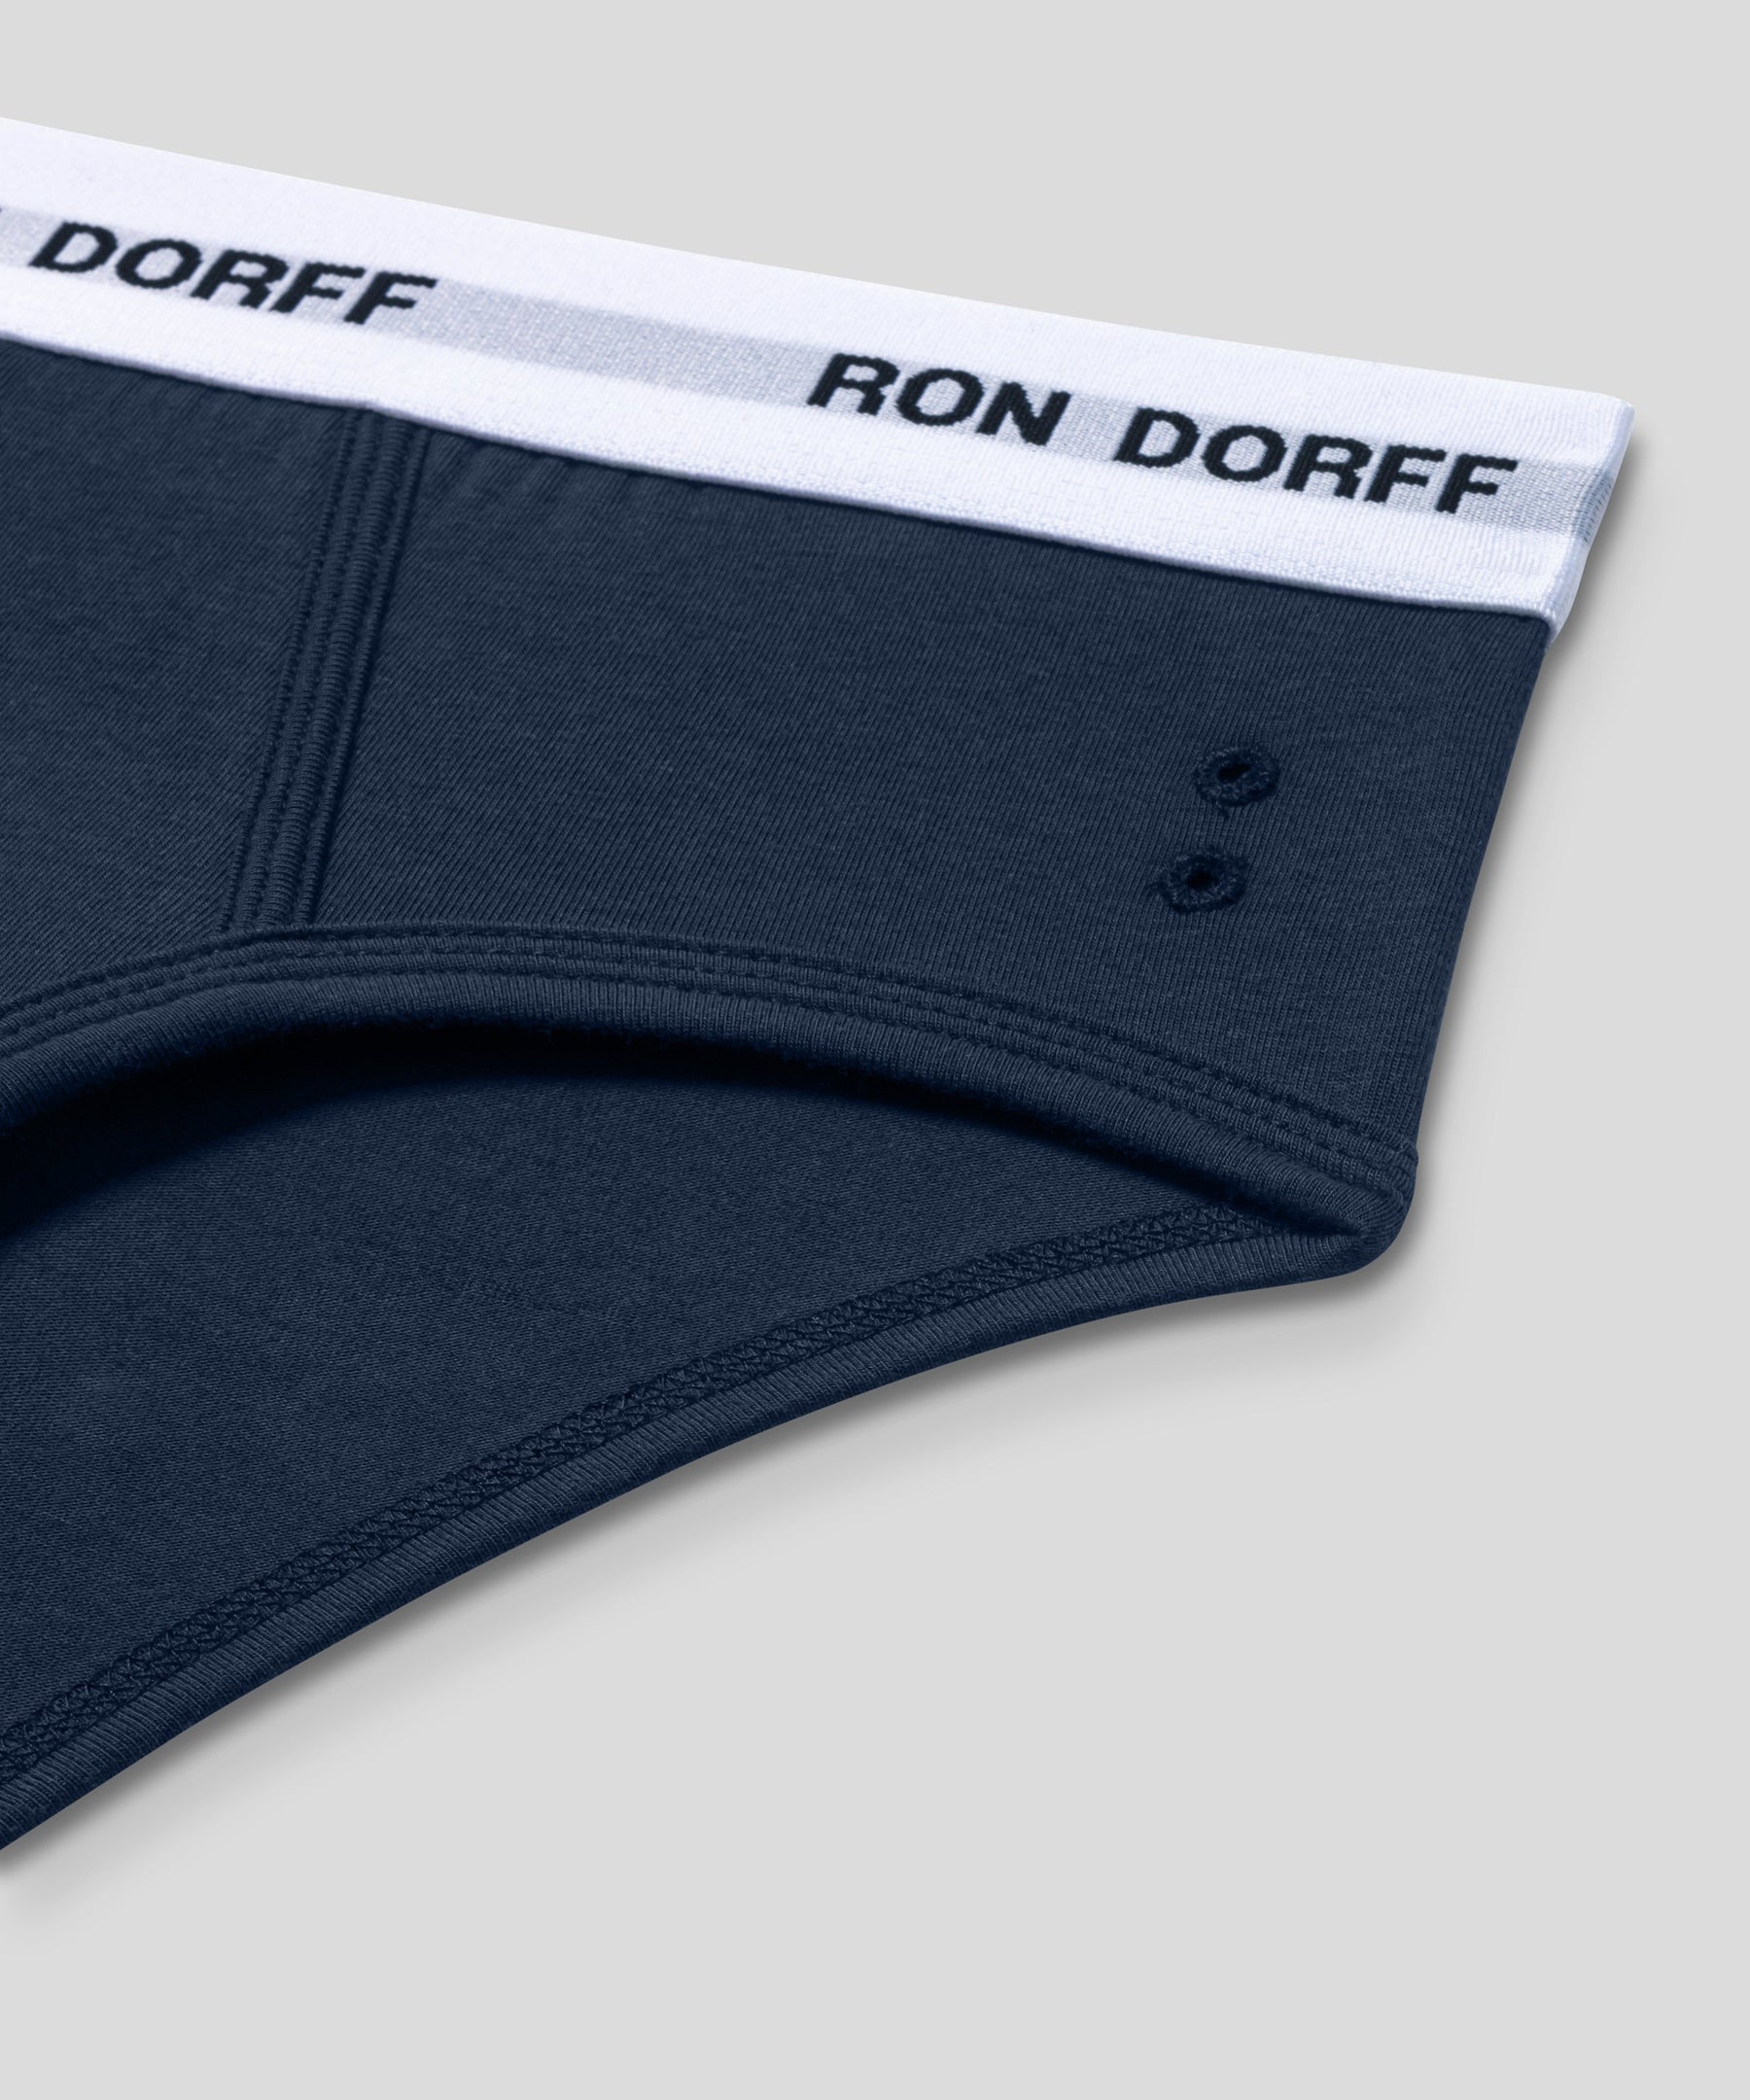 RON DORFF Y-Front Briefs Kit: Heather Grey/Army Green/Deep Blue